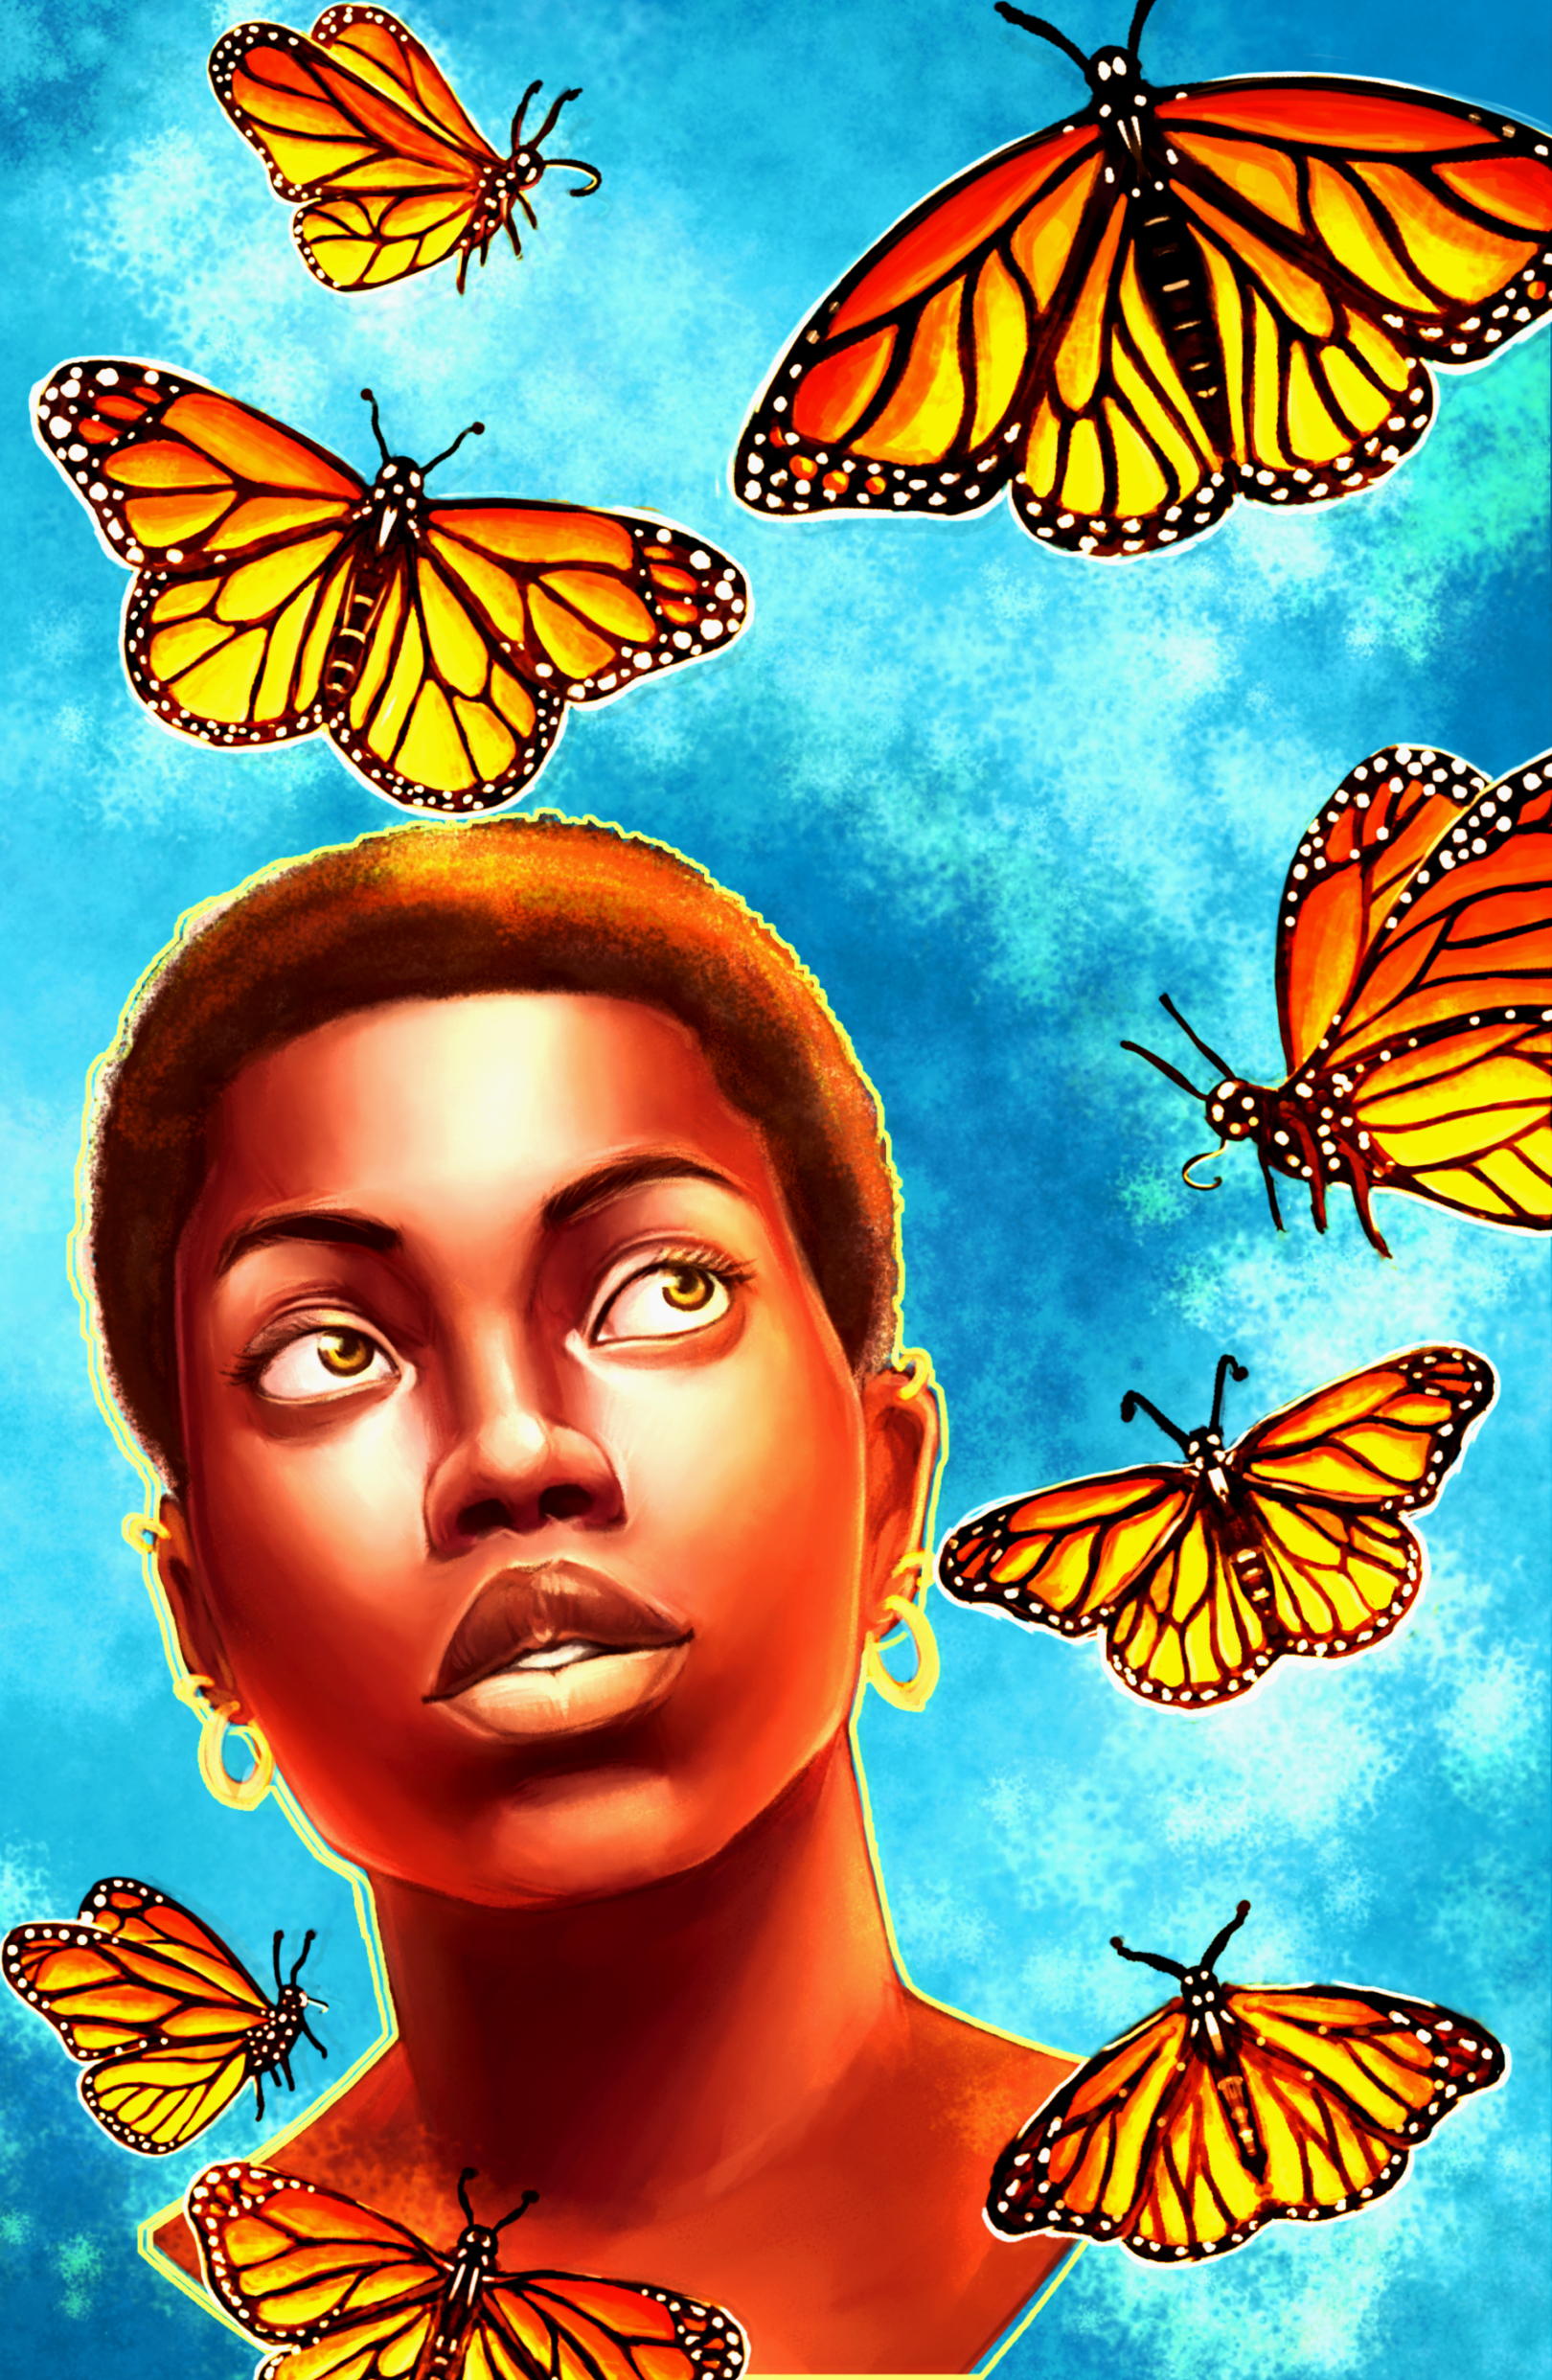 Digital art of woman with butterflies by Ja'lisa Yates